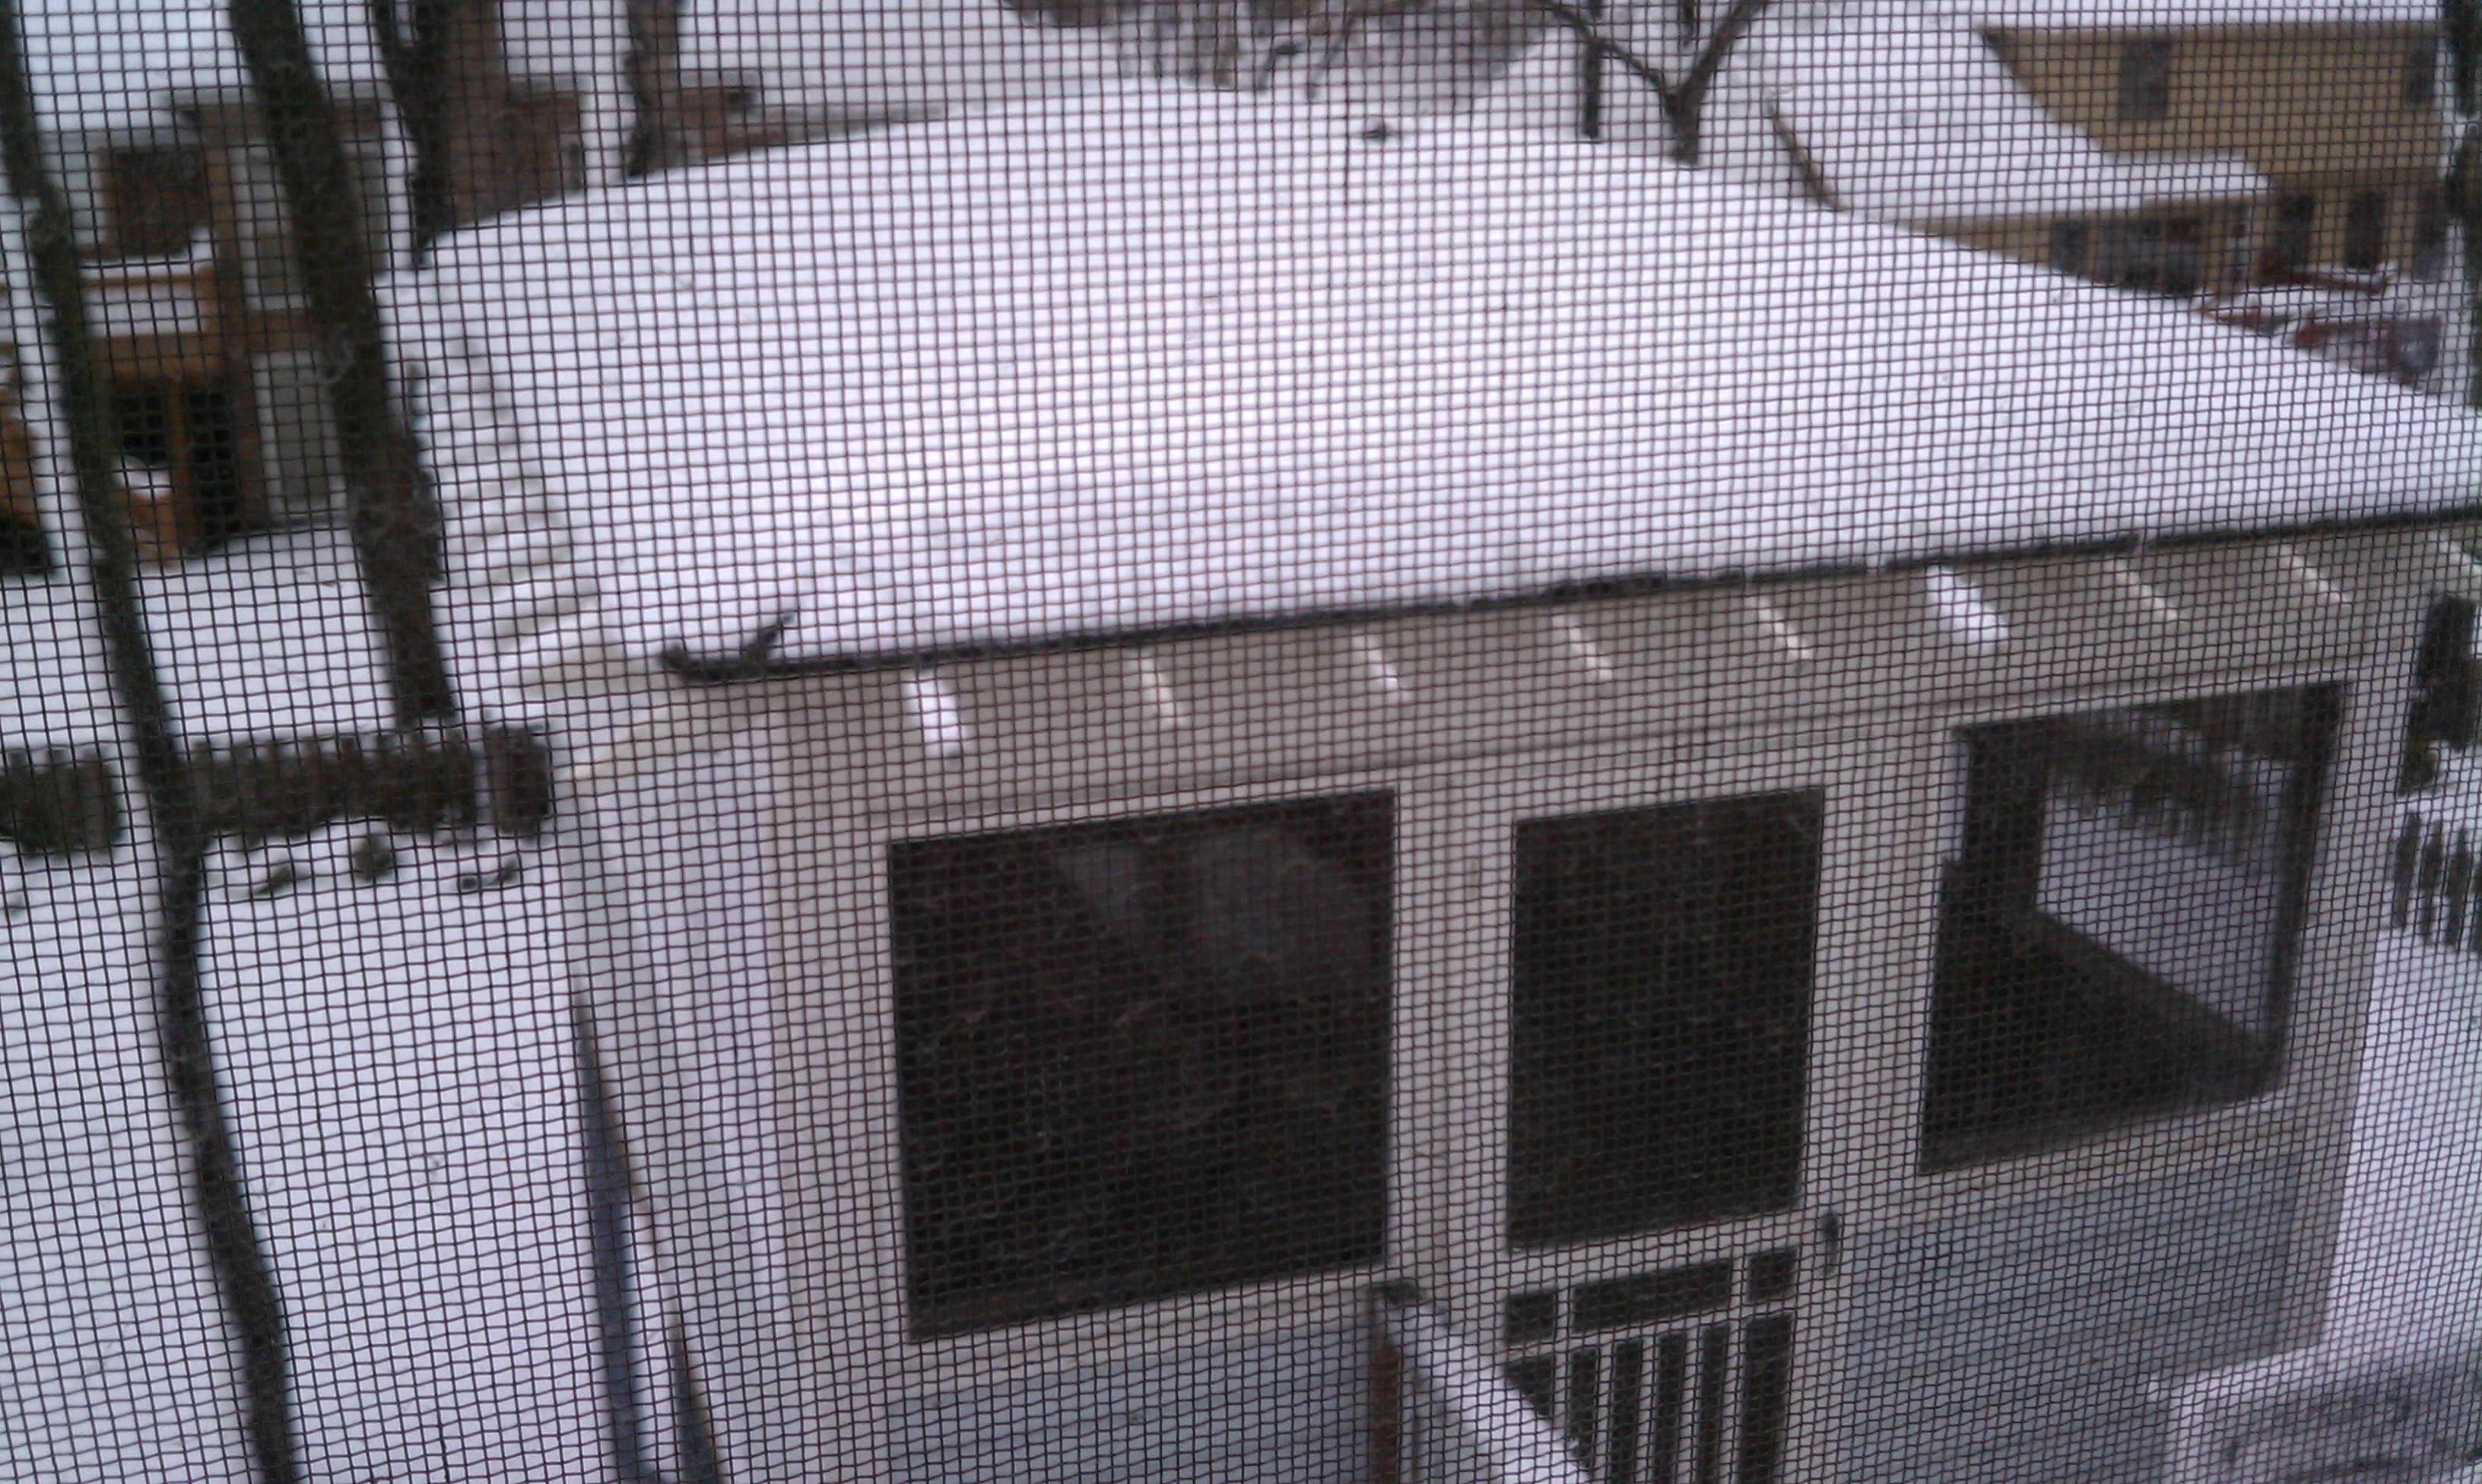 My sun porch looks as bereft as I feel